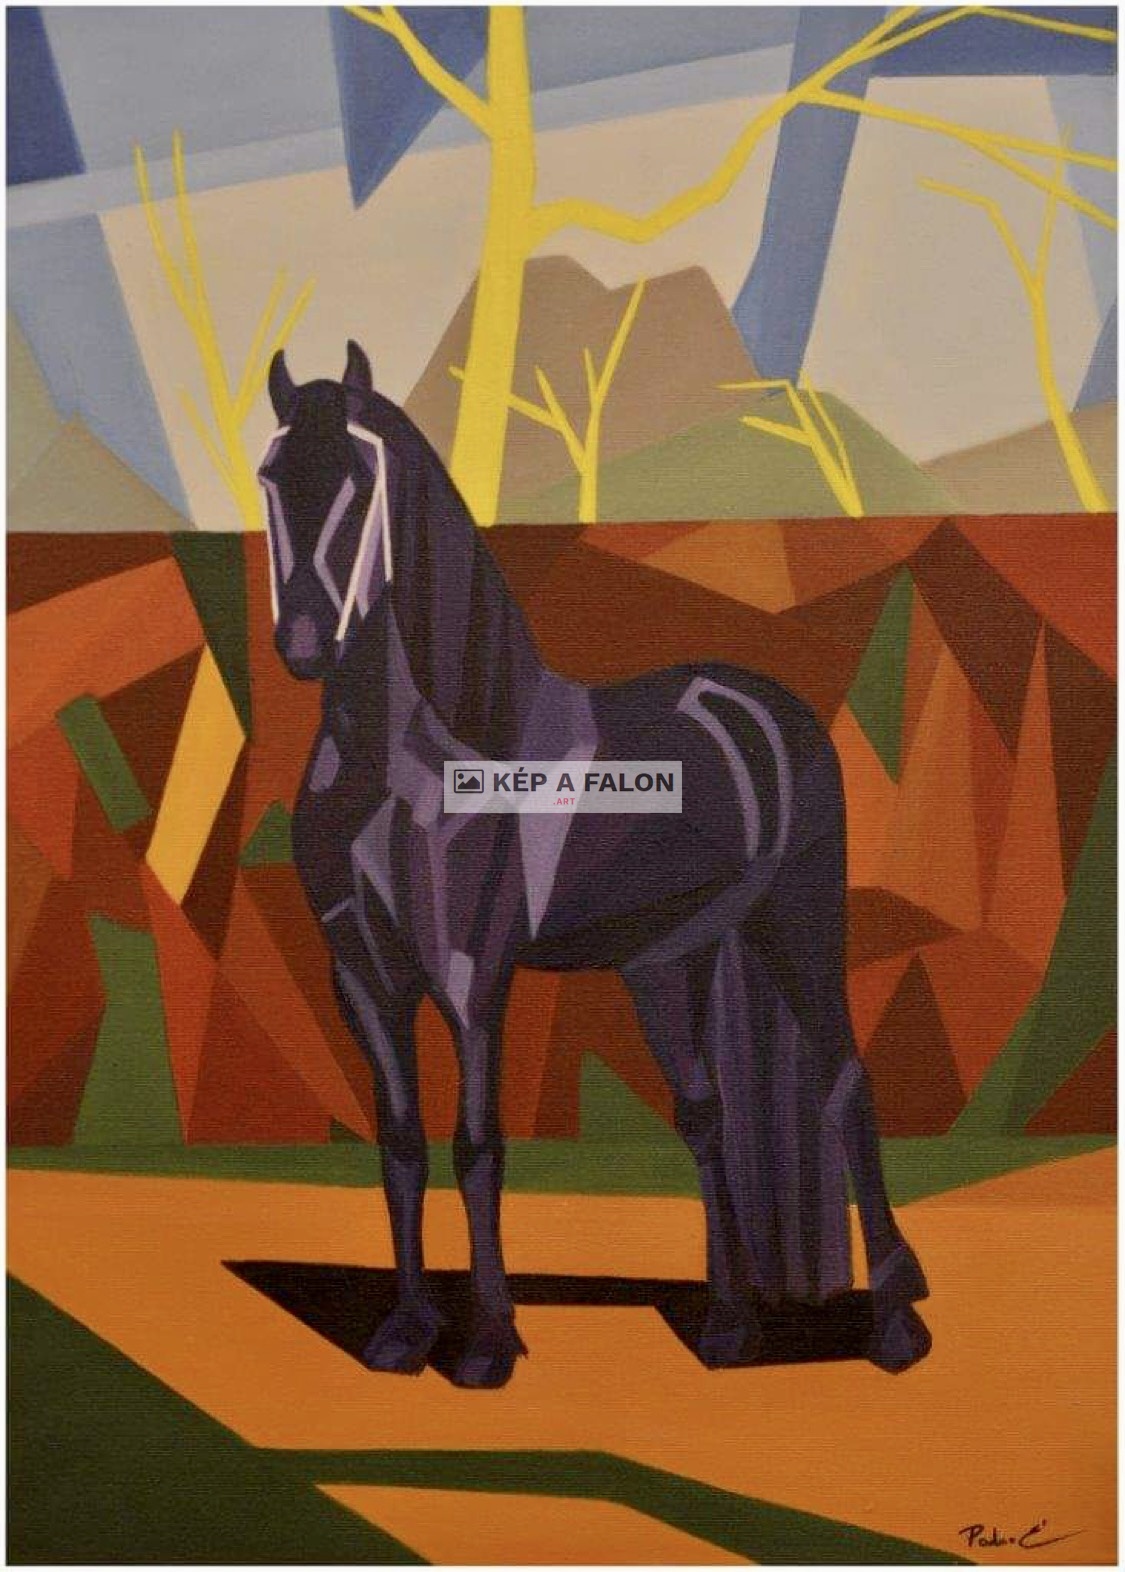 Lali a lila ló  by: Pados Éva | 2021, olaj festmény